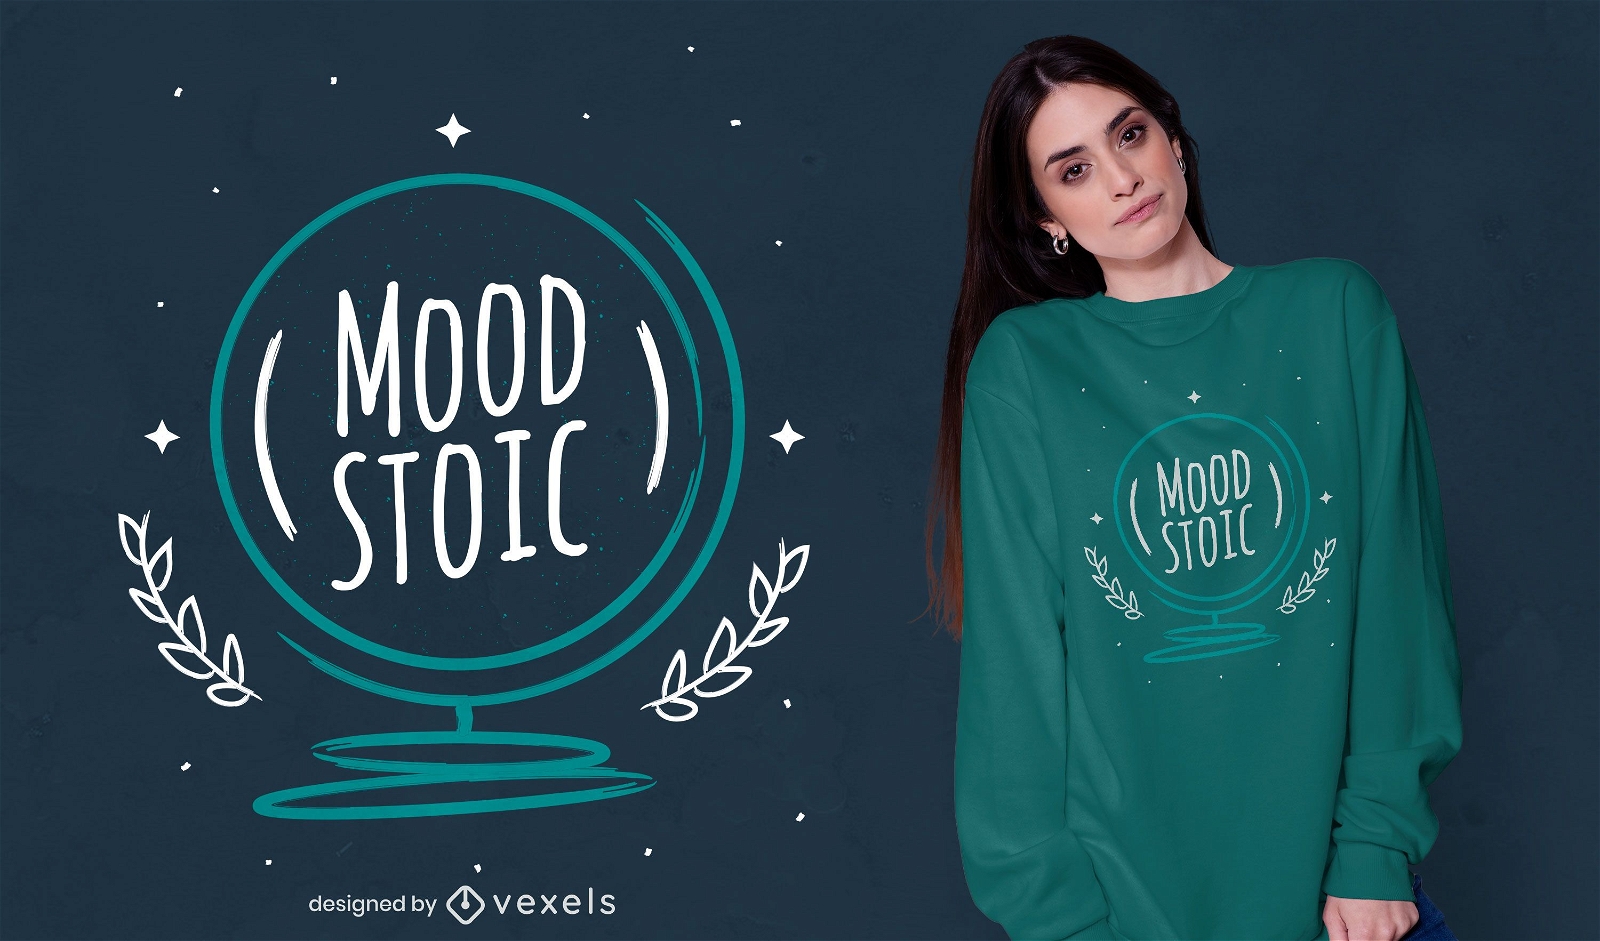 Mood stoic t-shirt design